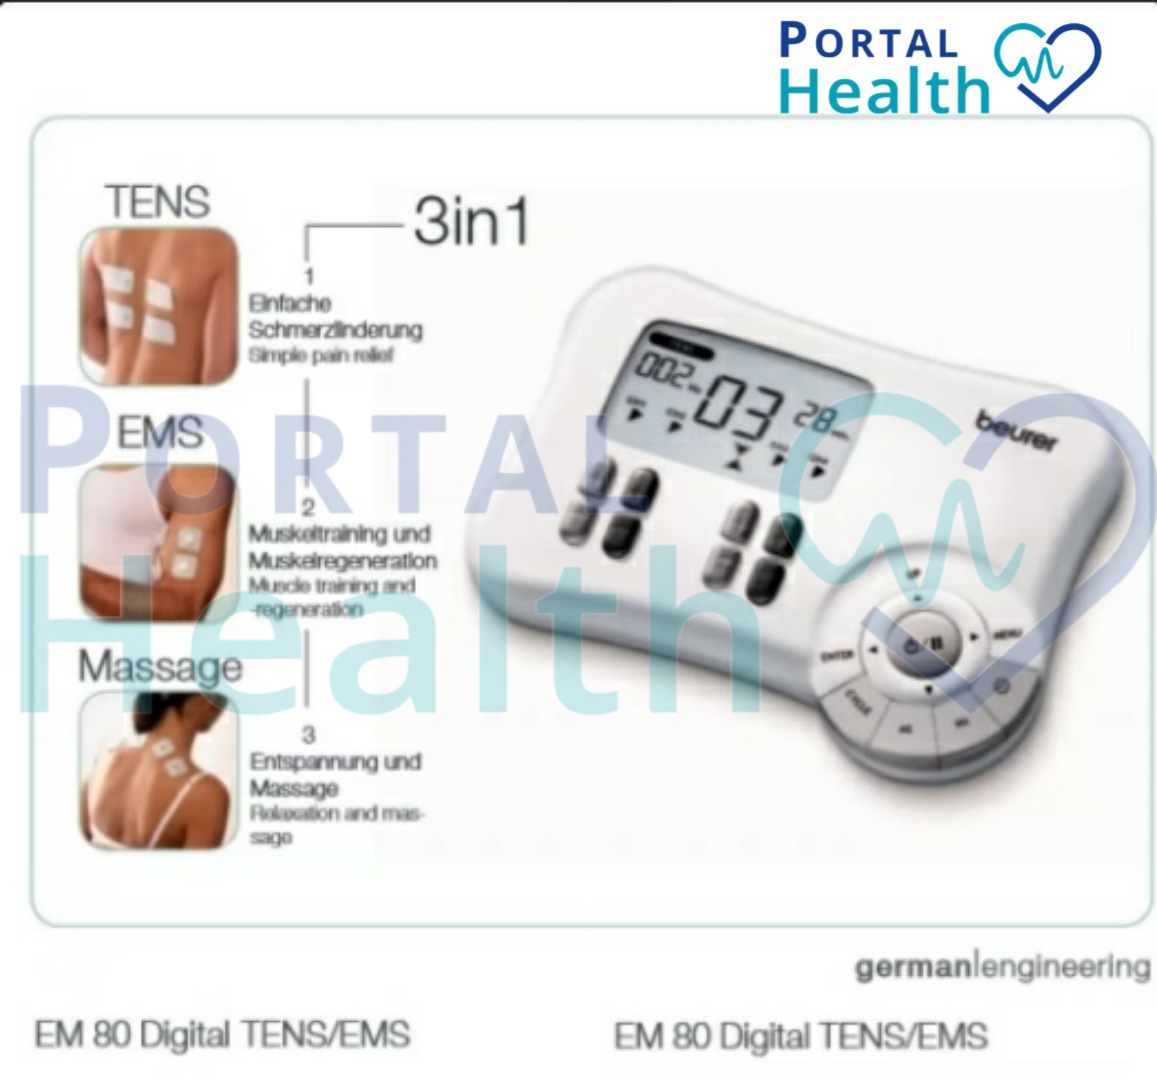 Unidad TENS / EMS digital 3 en 1 EM 80 de Beurer - PortalHealth